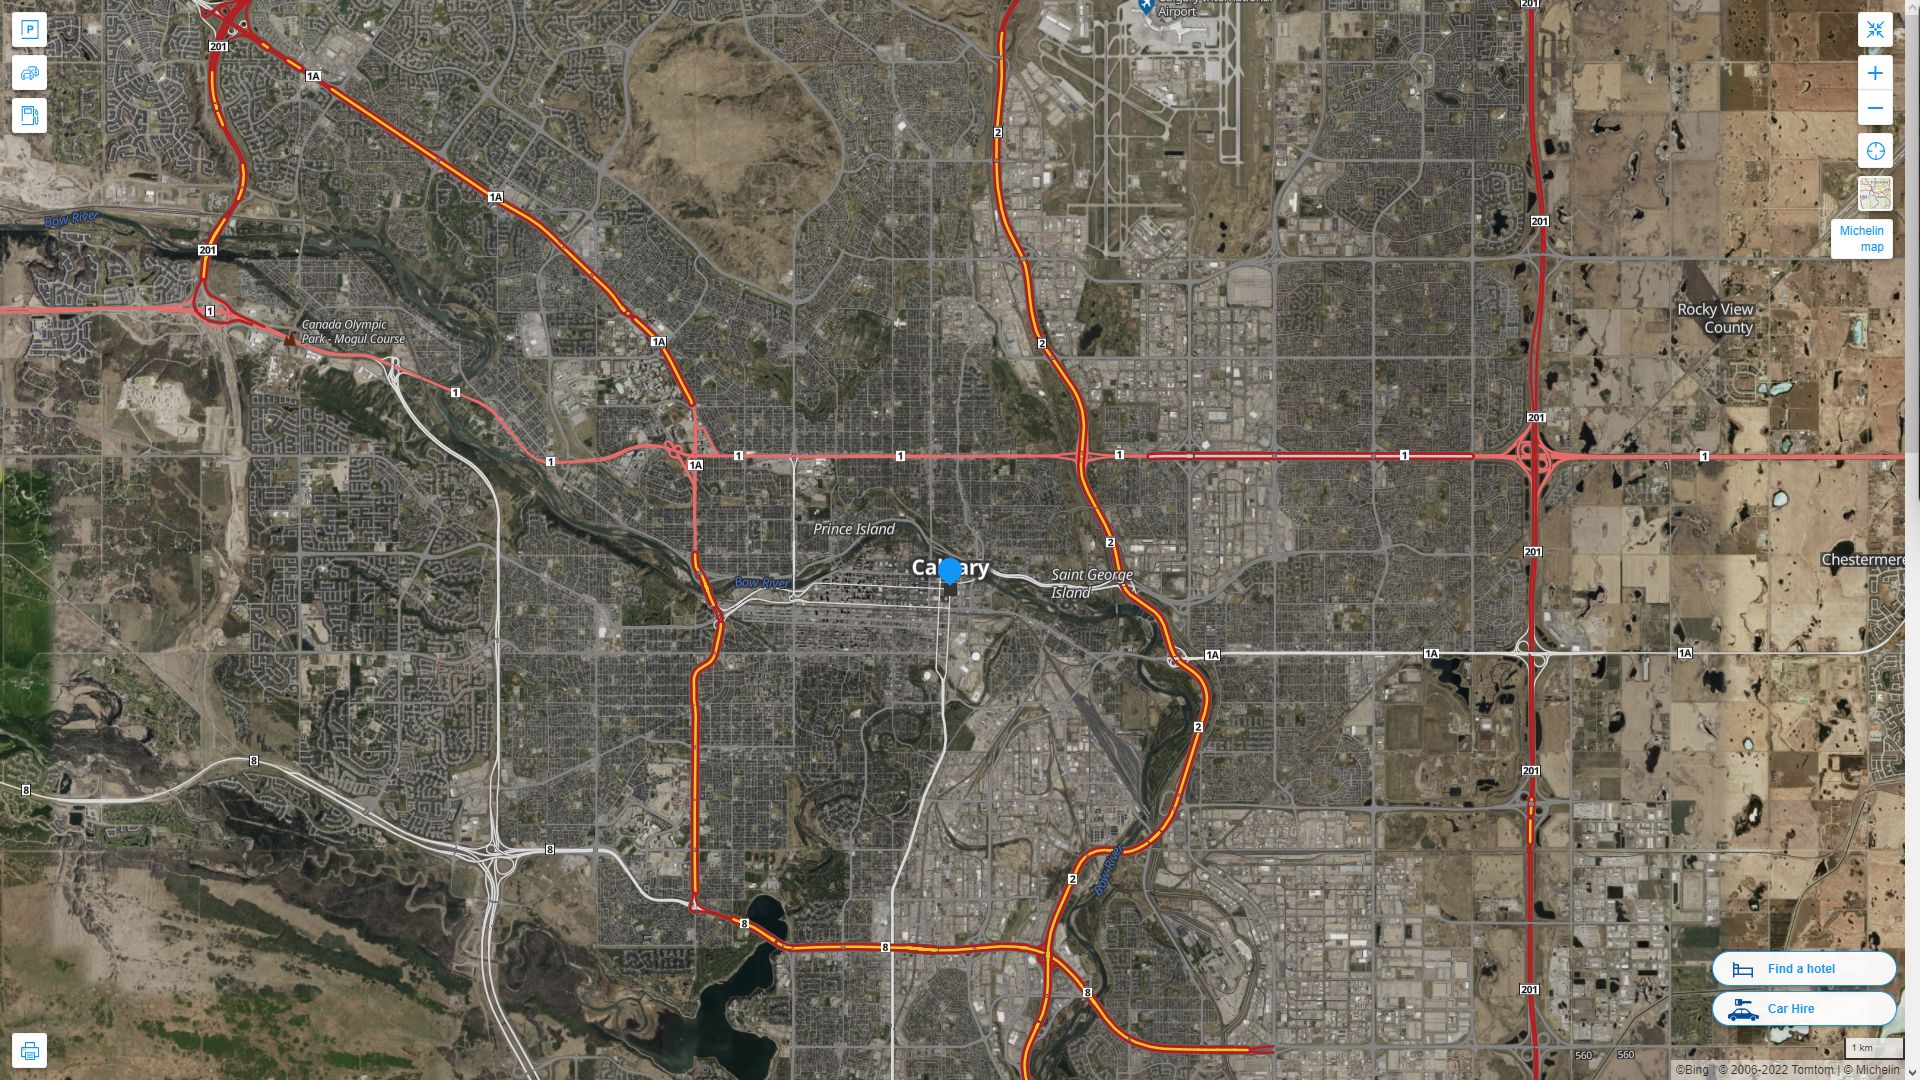 Calgary Canada Autoroute et carte routiere avec vue satellite